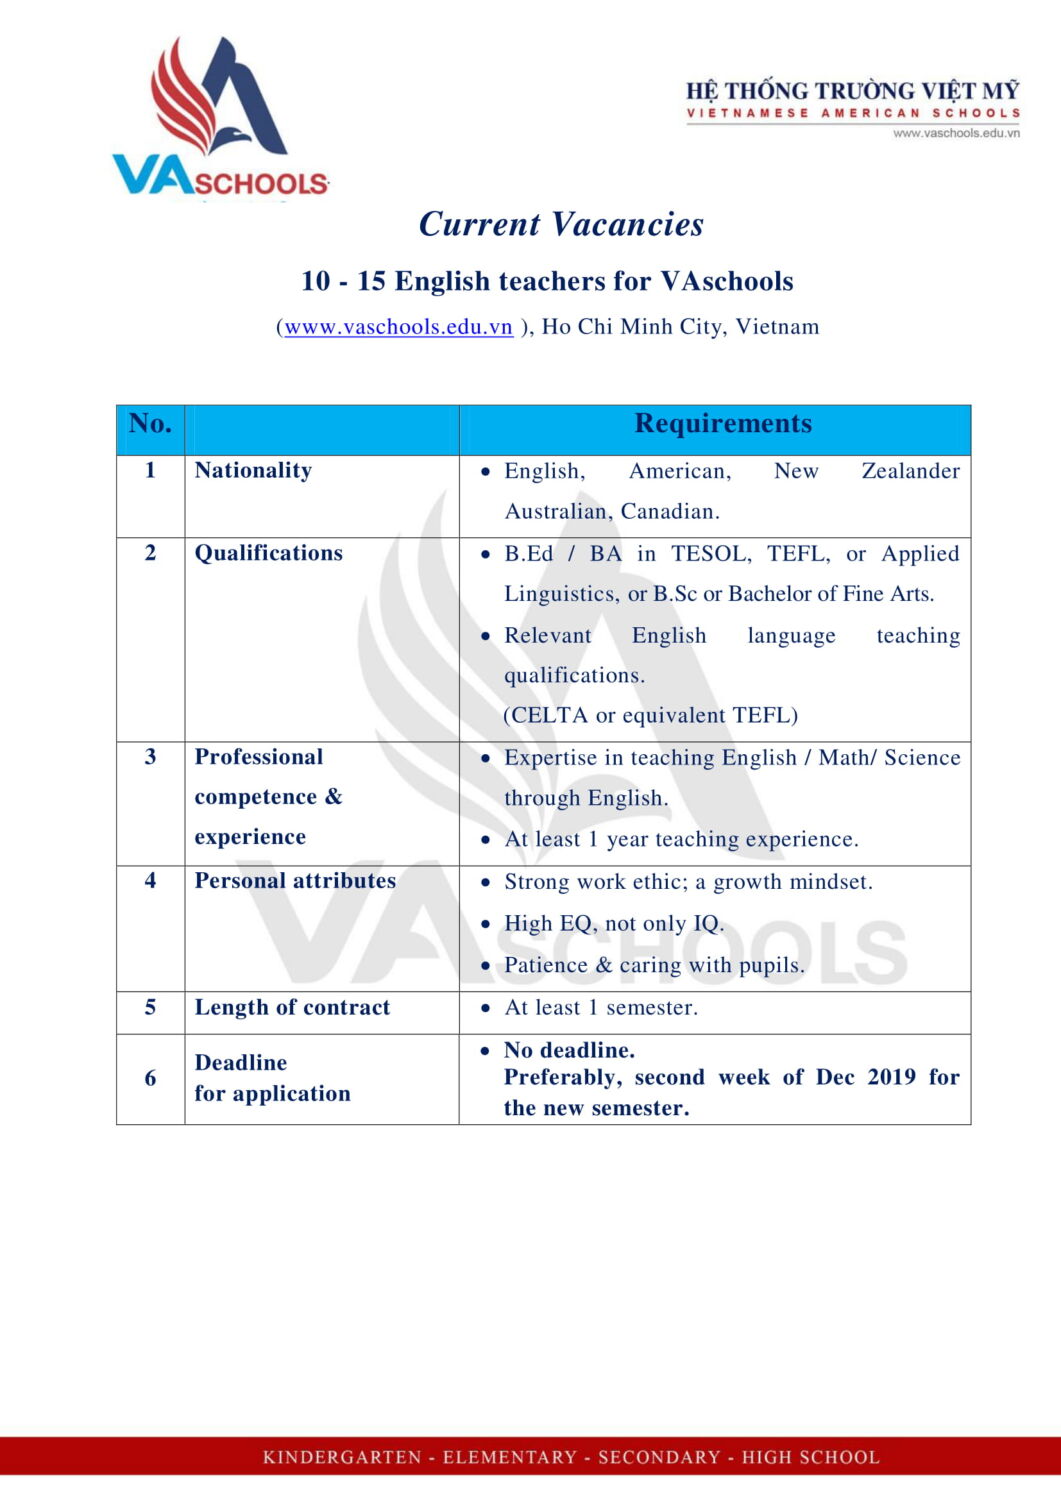 Current Vacancies English Teachers for VAschools